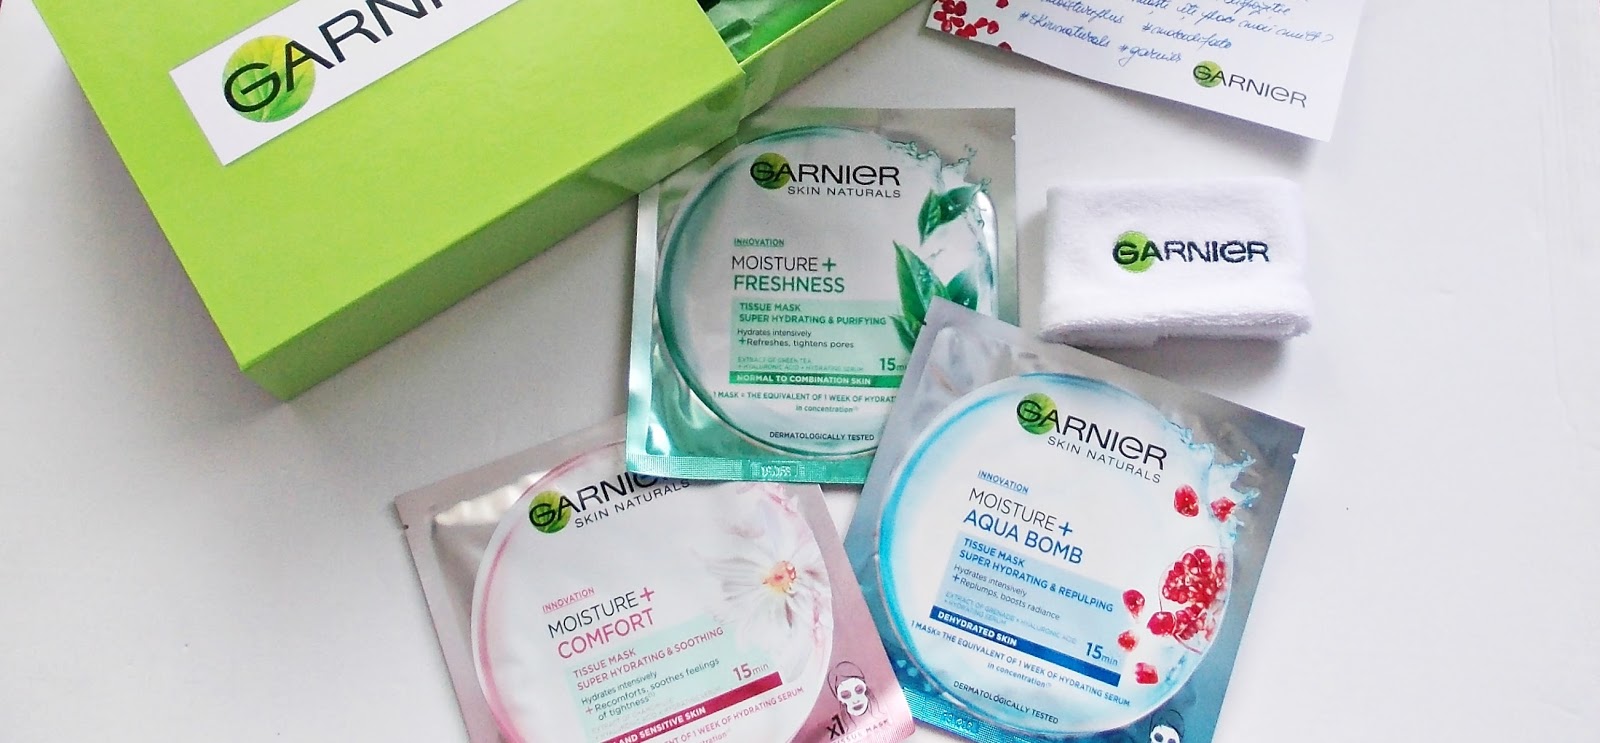 Noile măşti Garnier Skin Natural Moisture+ | Care vi se potriveşte?